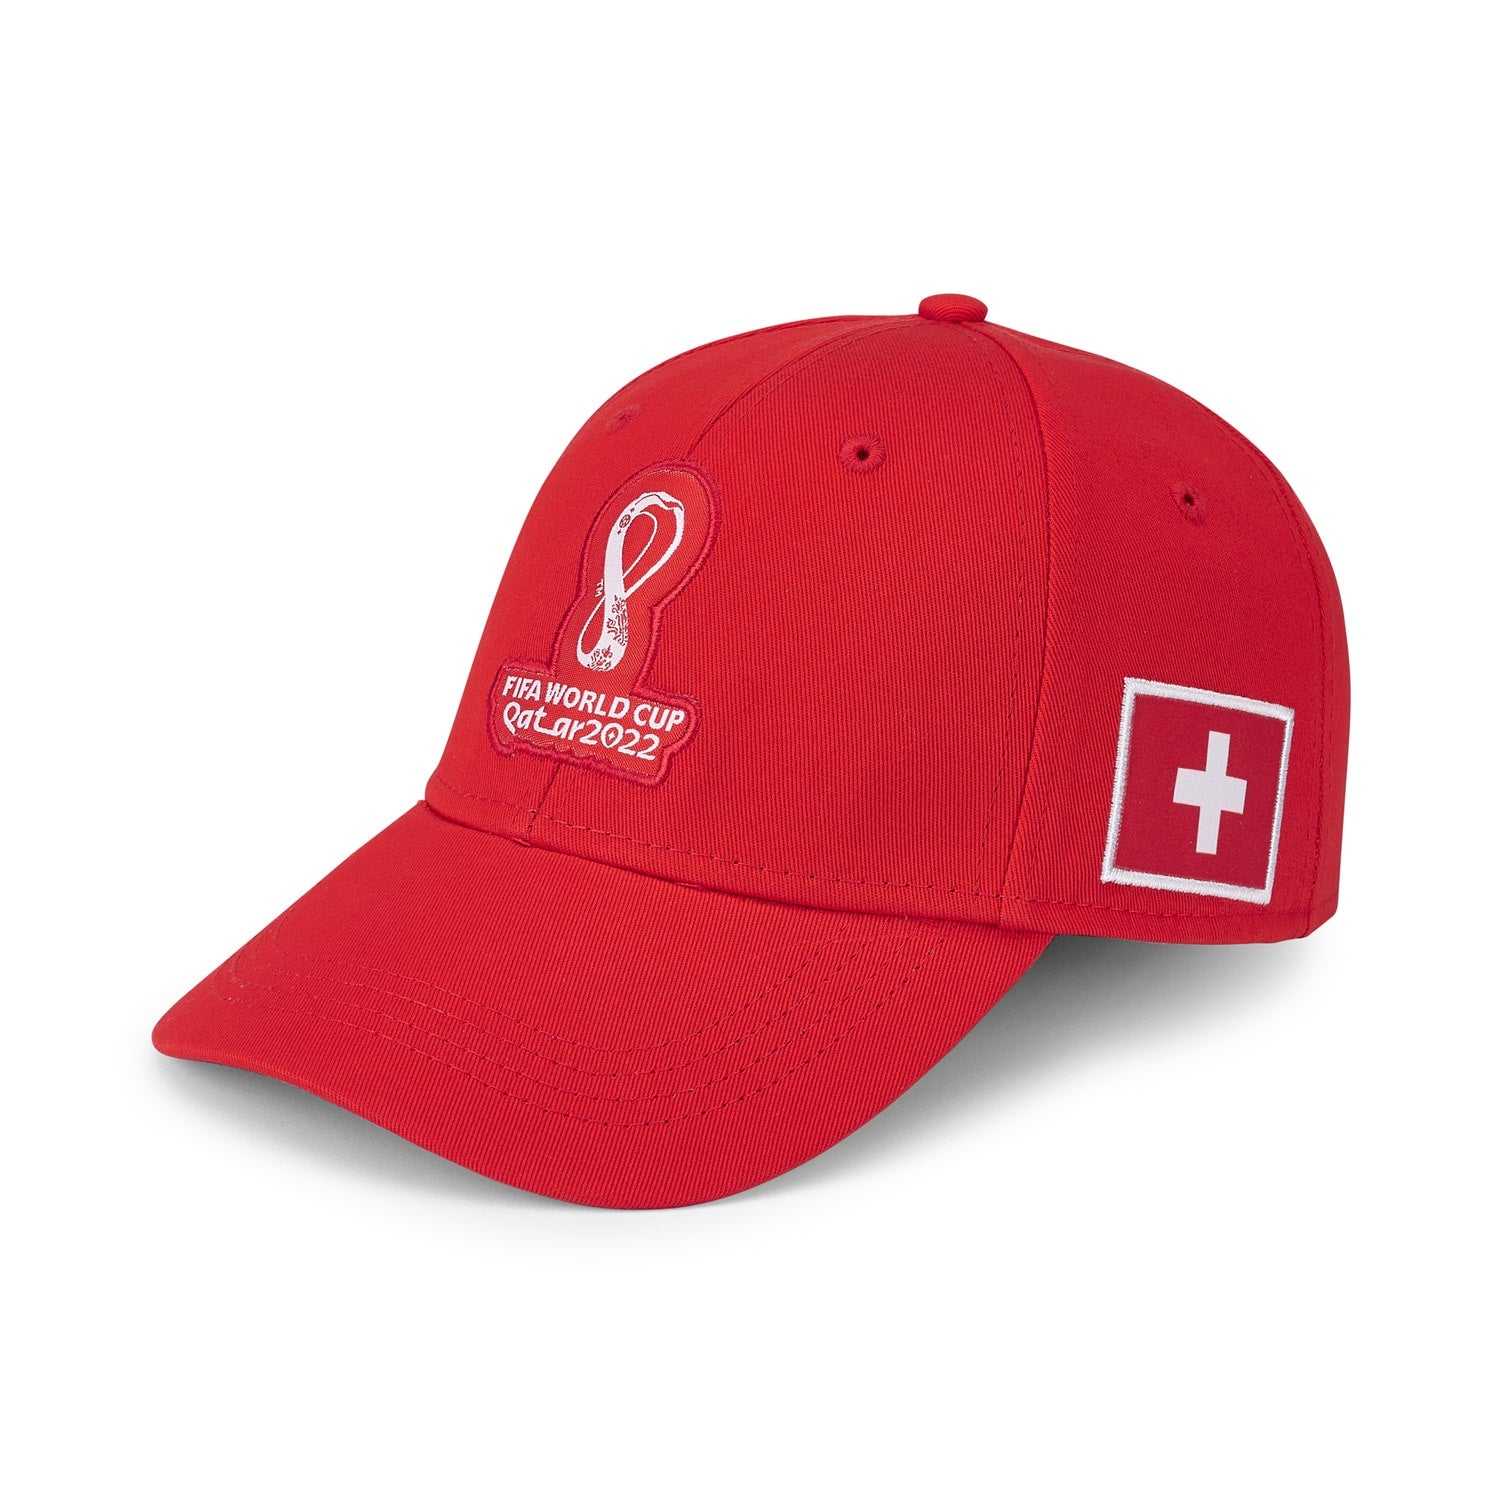 2022 World Cup Switzerland Red Cap - Mens